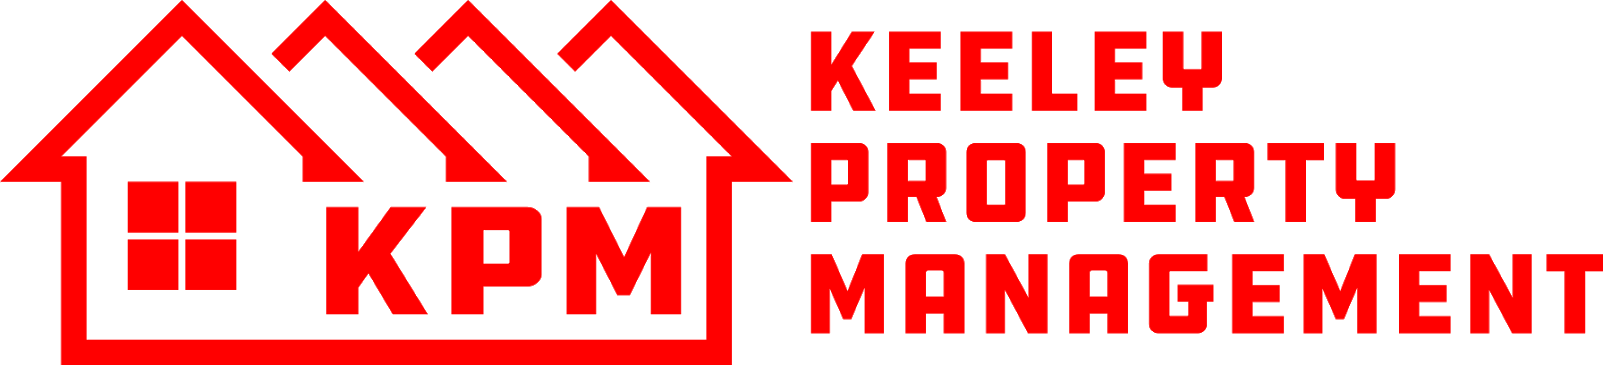 Keeley Property Management